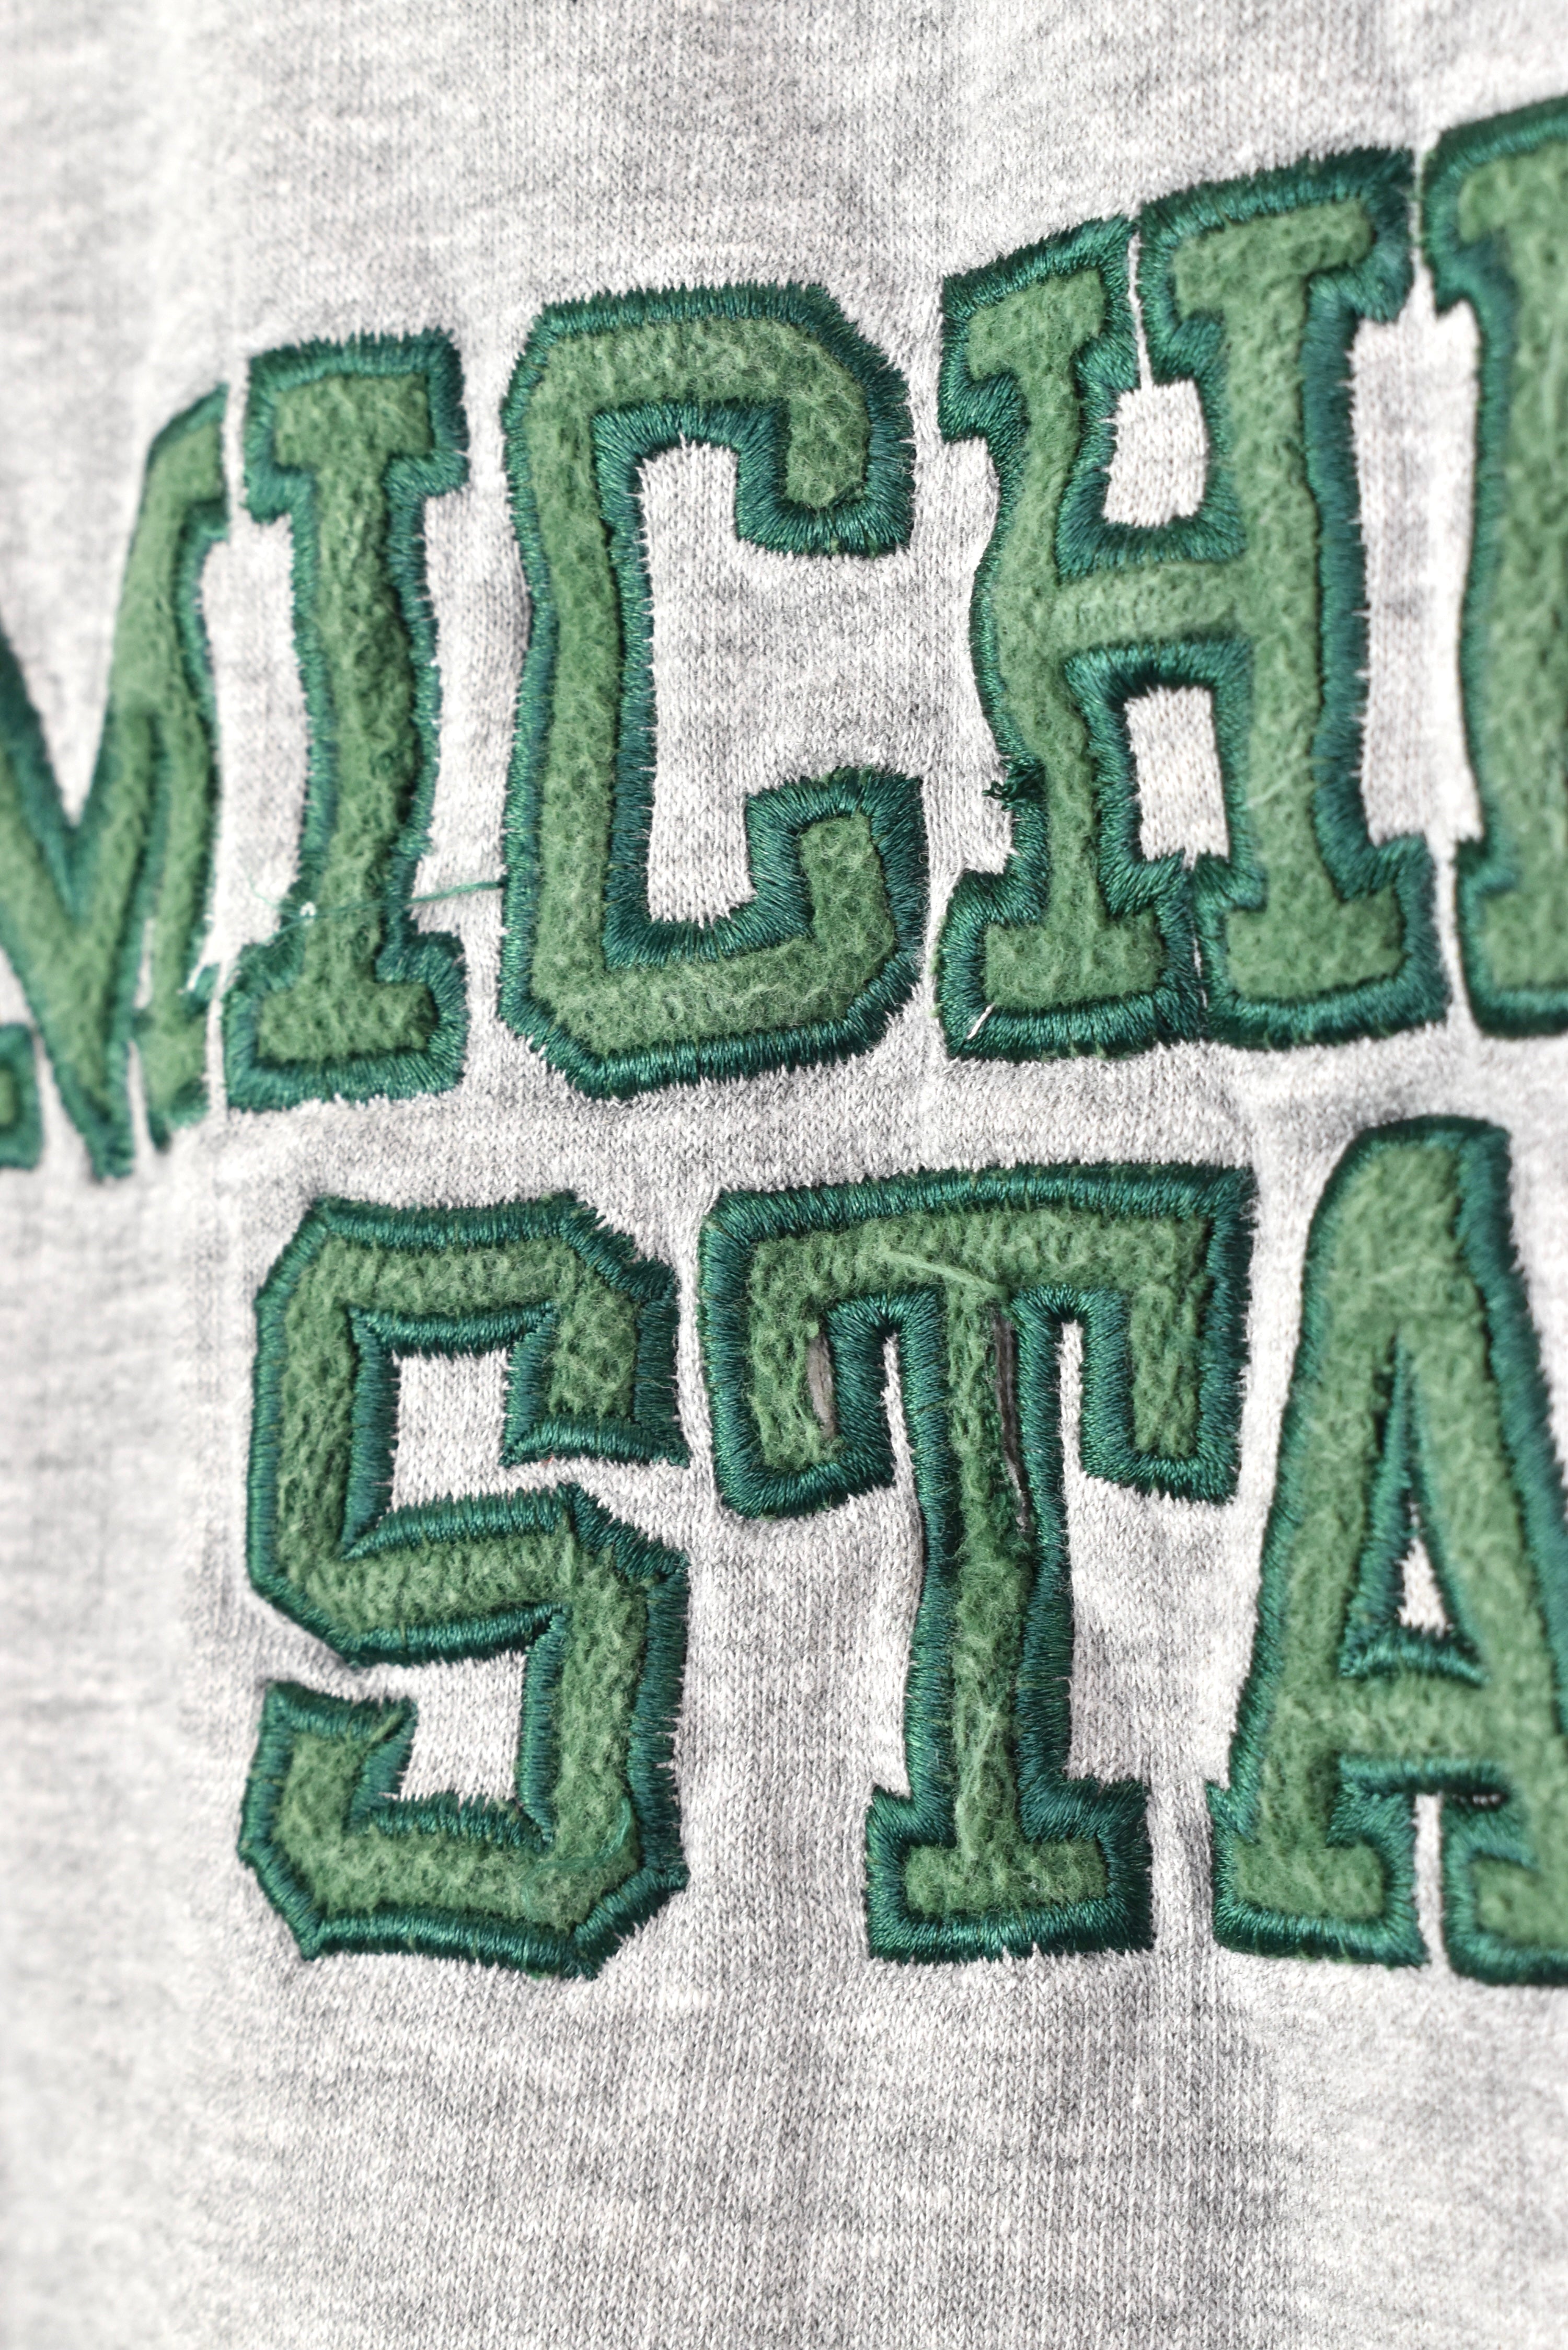 Vintage Michigan State University sweatshirt, long sleeve embroidered crewneck - large, grey COLLEGE